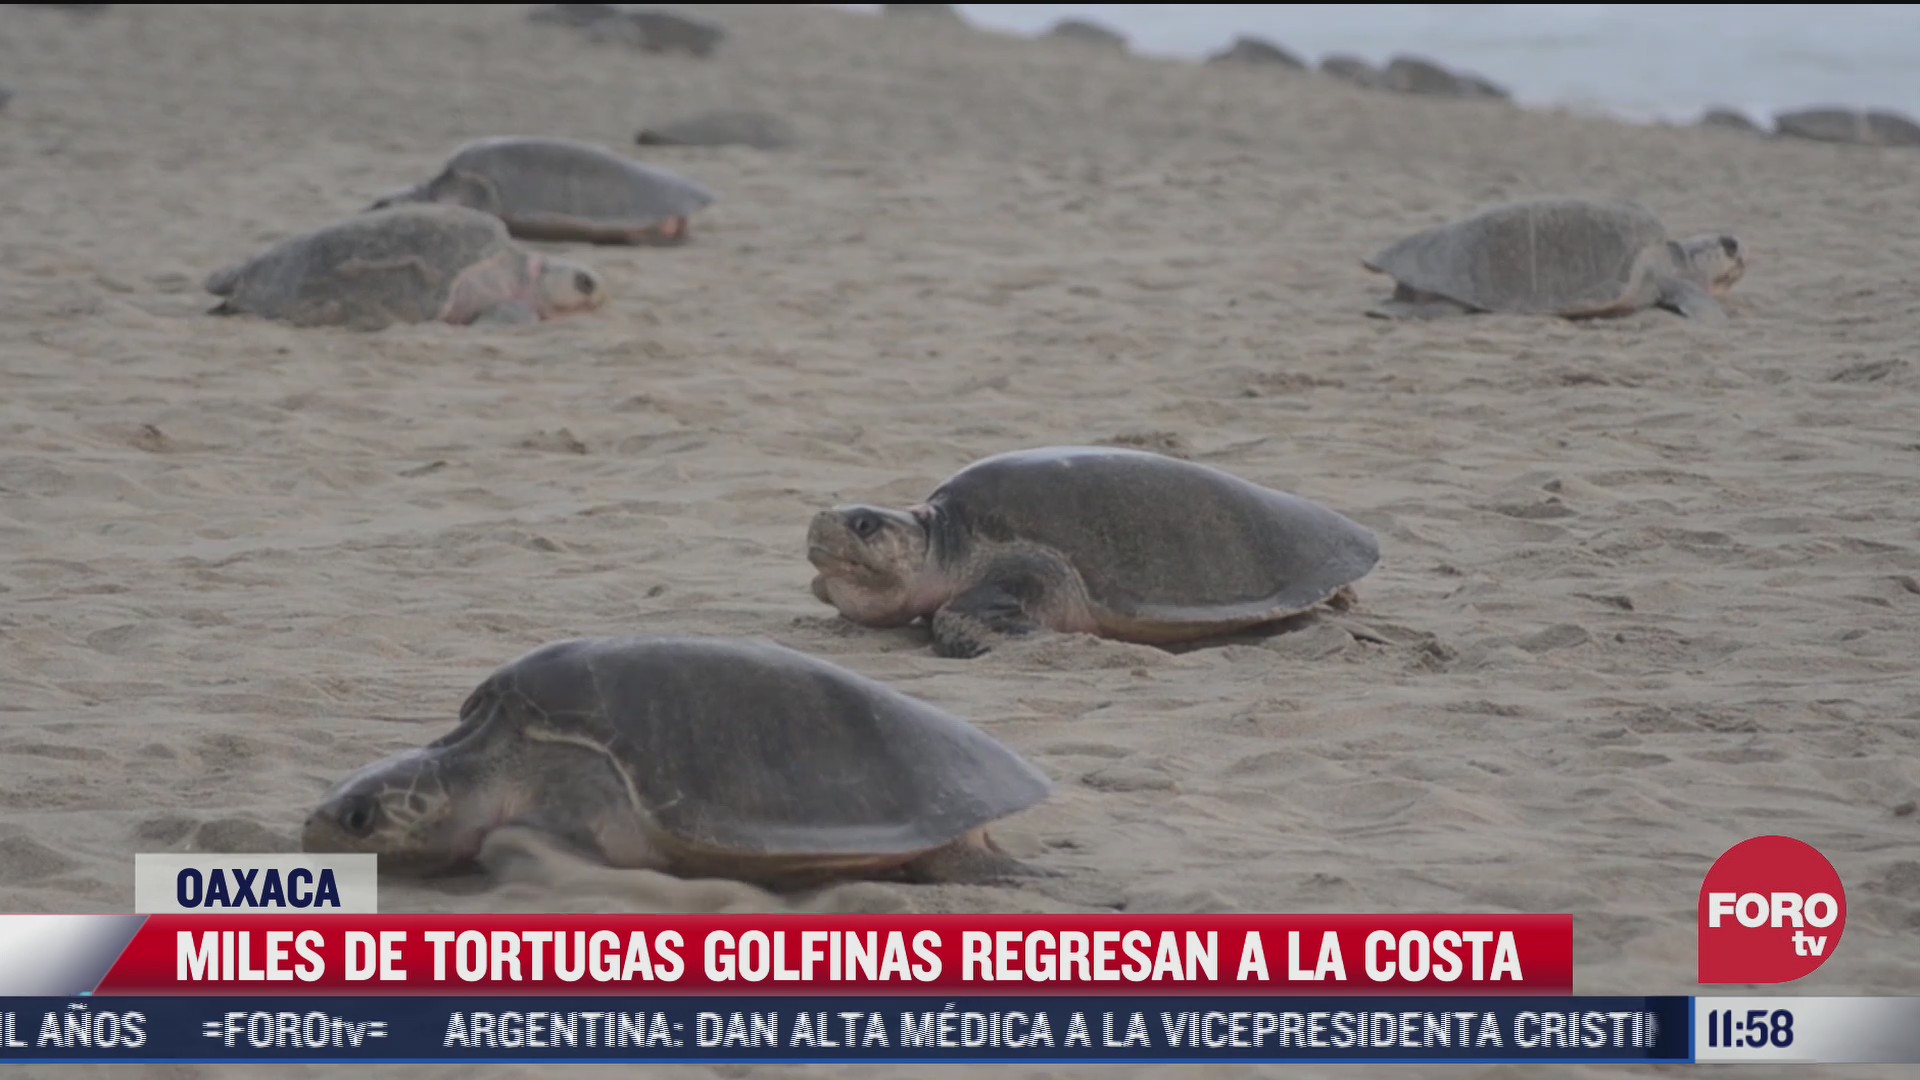 miles de tortugas golfinas regresan a la costa en oaxaca